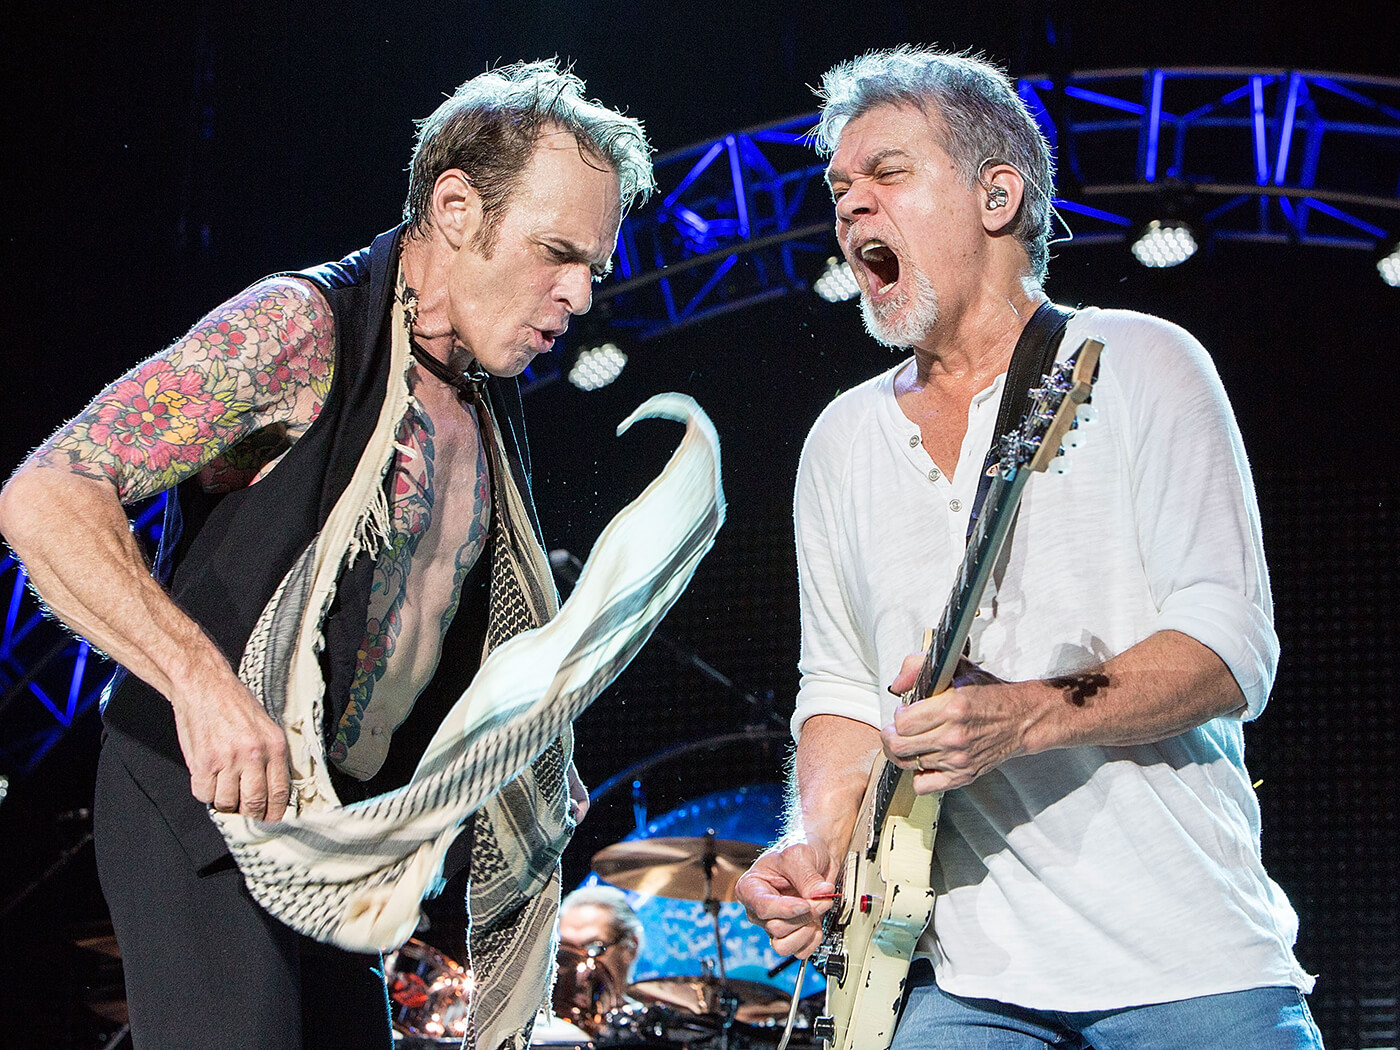 David Lee Roth takes credit for Van Halen's solos